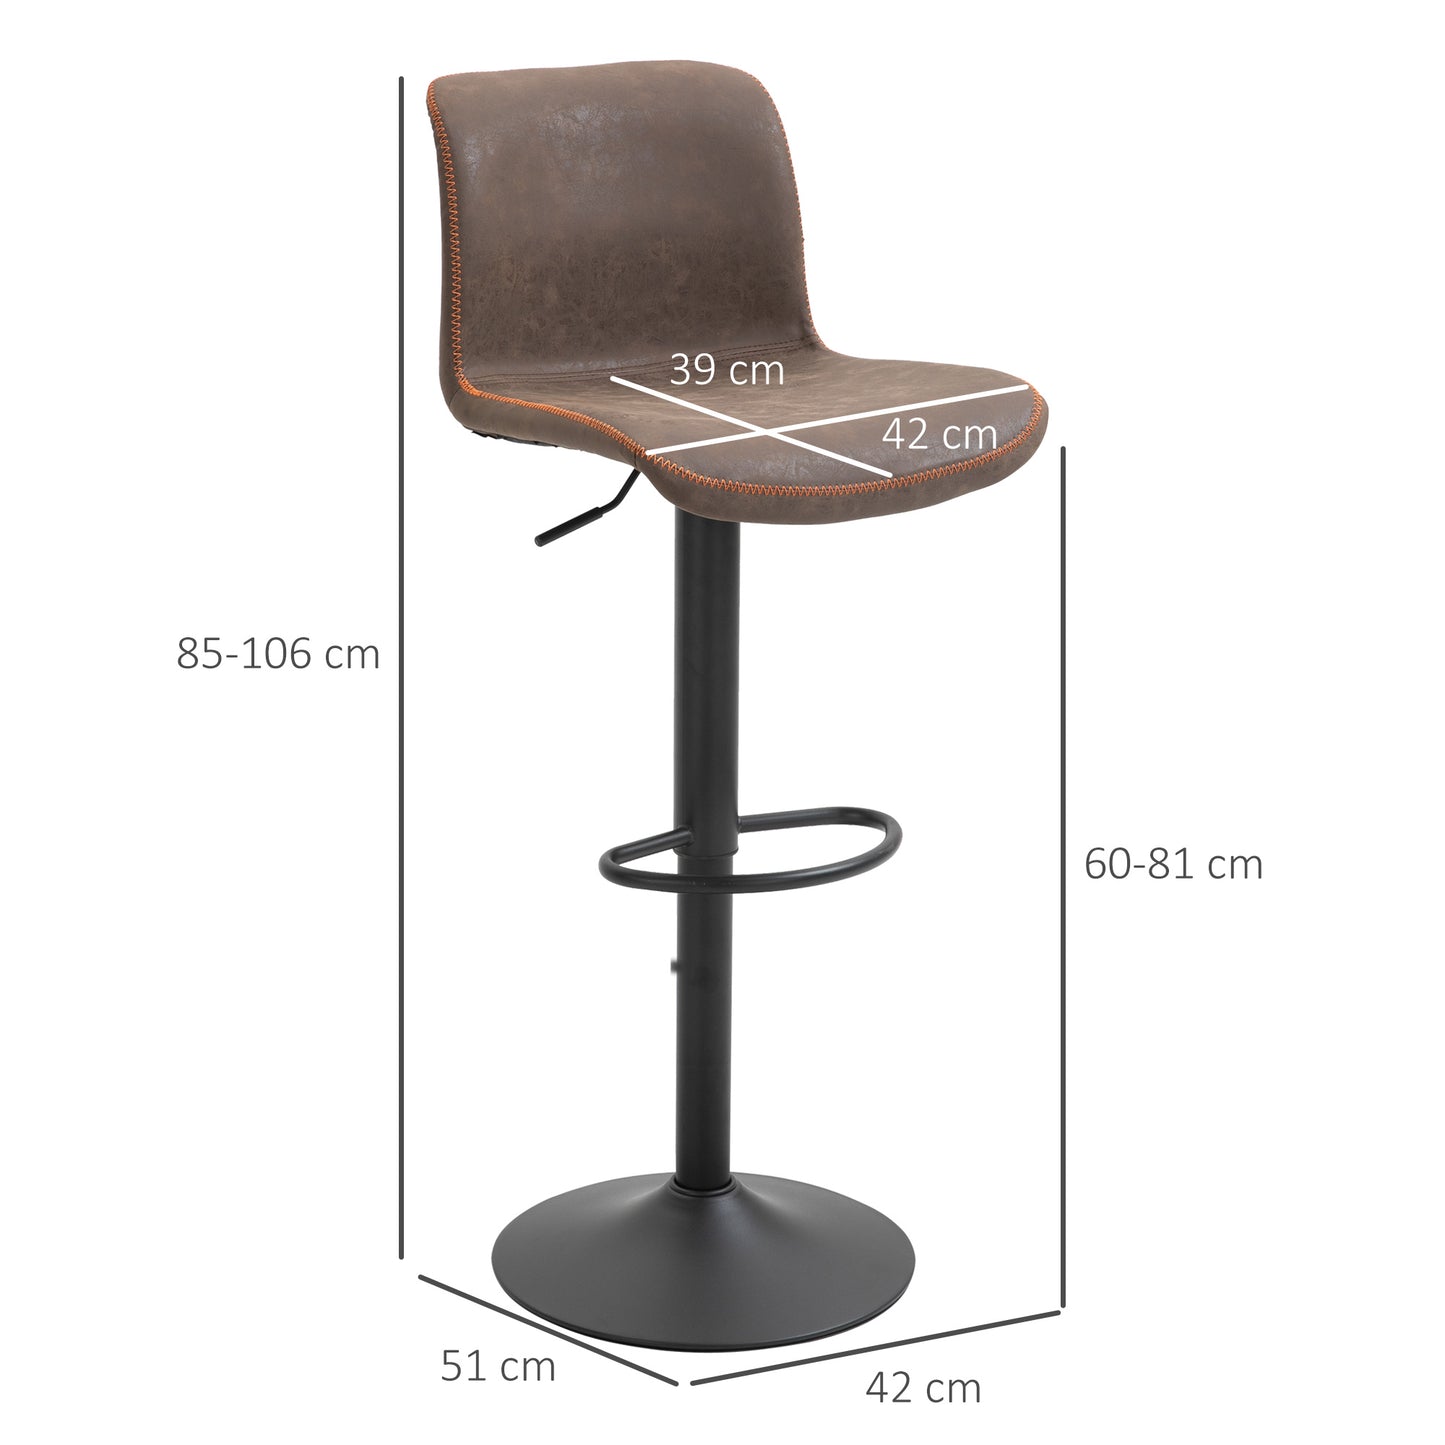 HOMCOM PU Leather Padded Bar Stools Adjustable Height Bar Chairs Swivel Stools Set